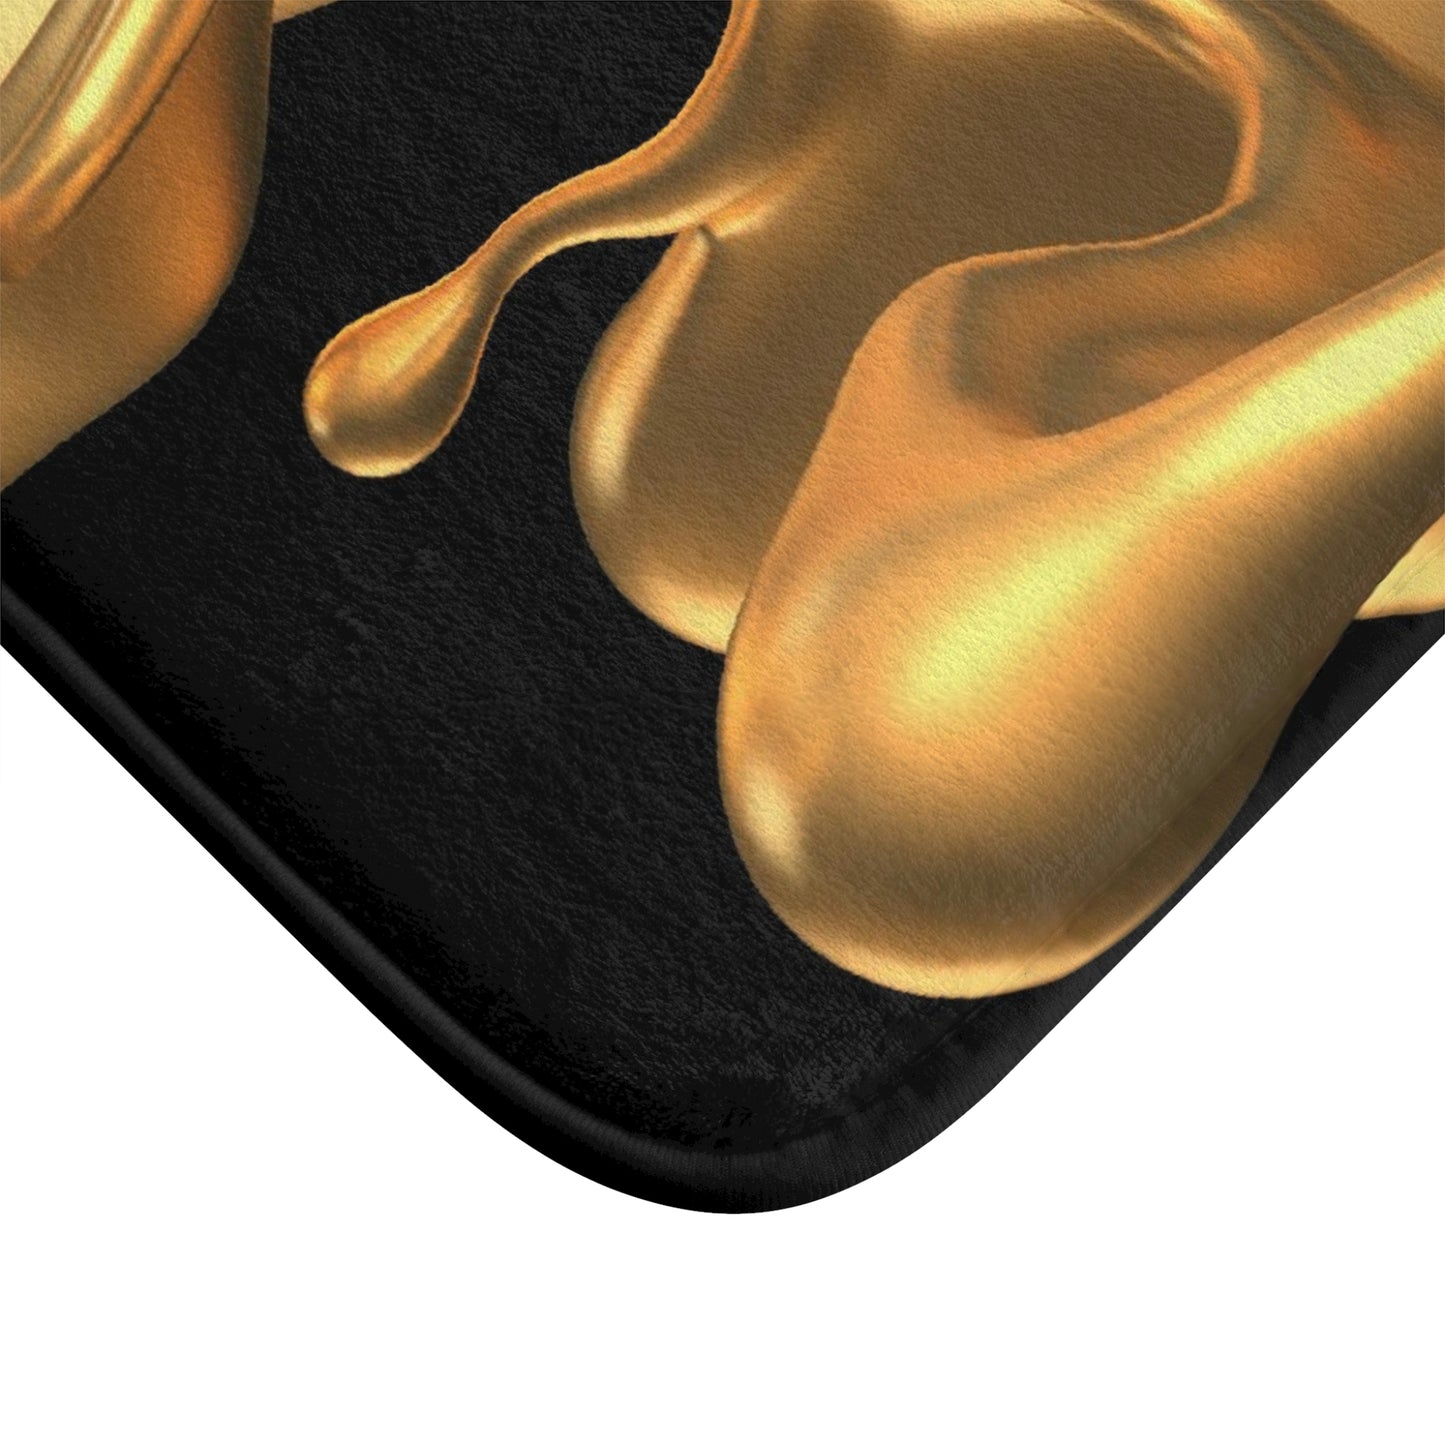 liquid Gold on Black Bath Mat